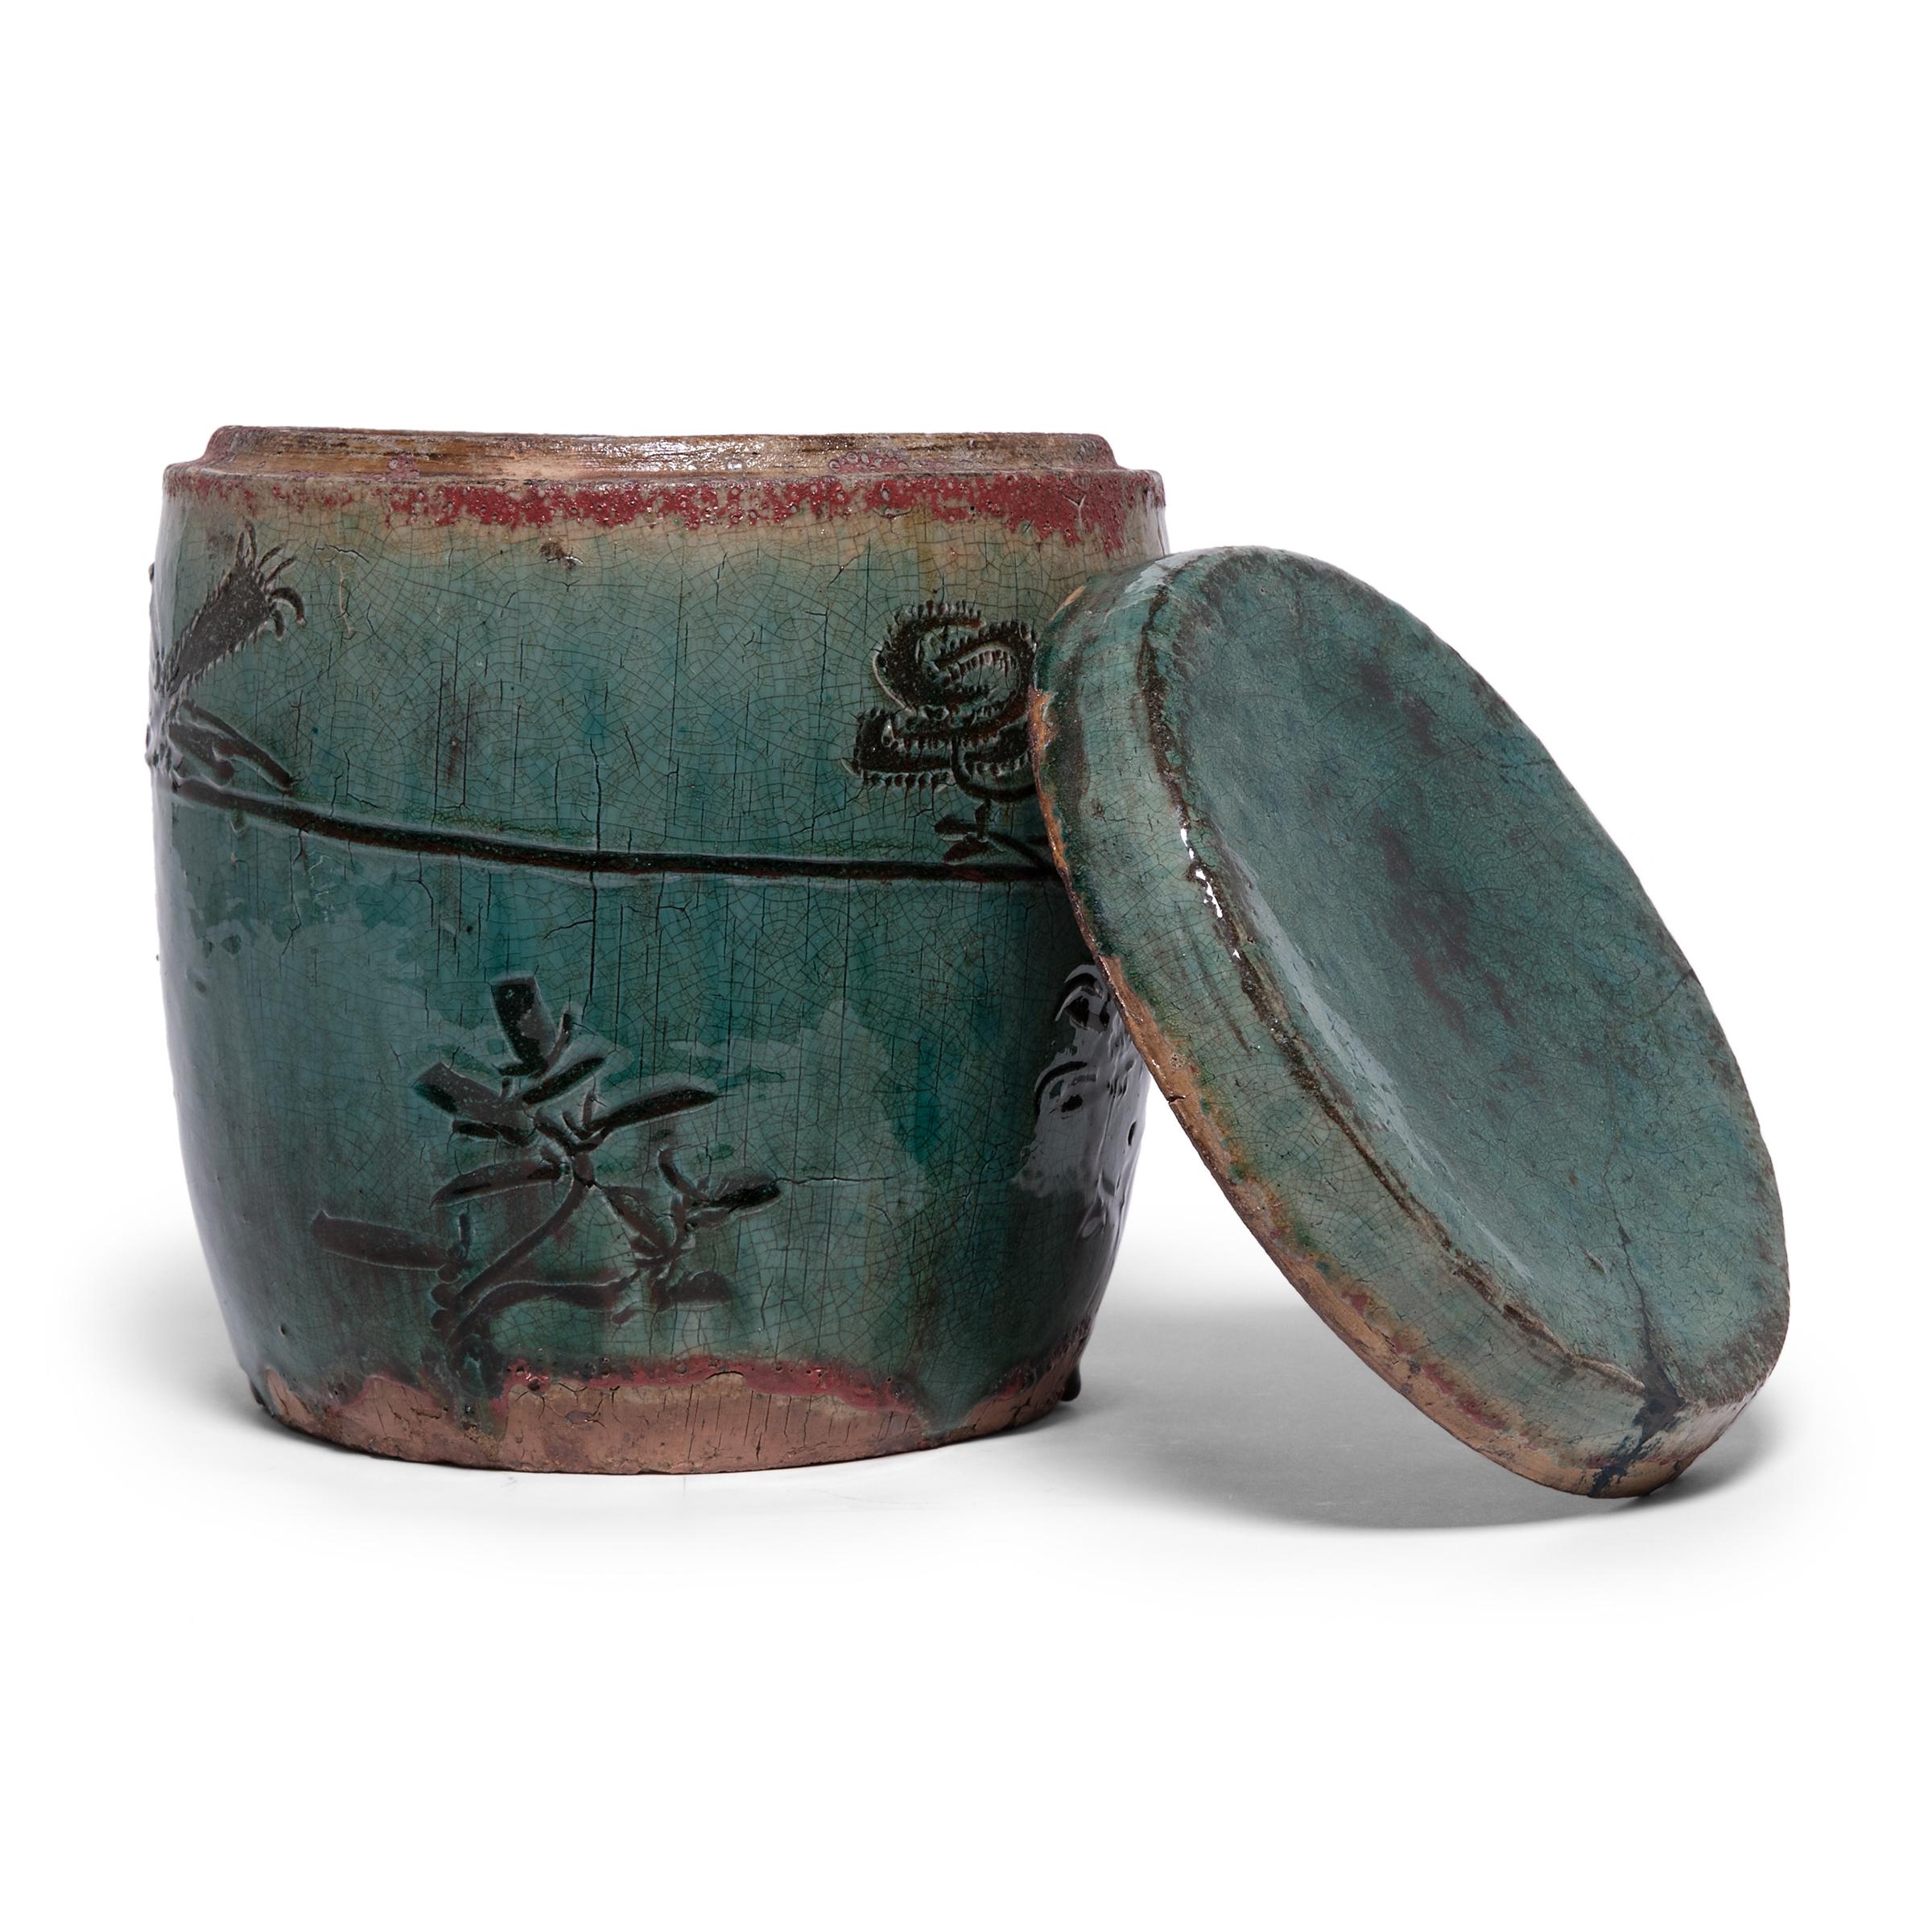 20th Century Chinese Green Glazed Apothecary Jar, c. 1900